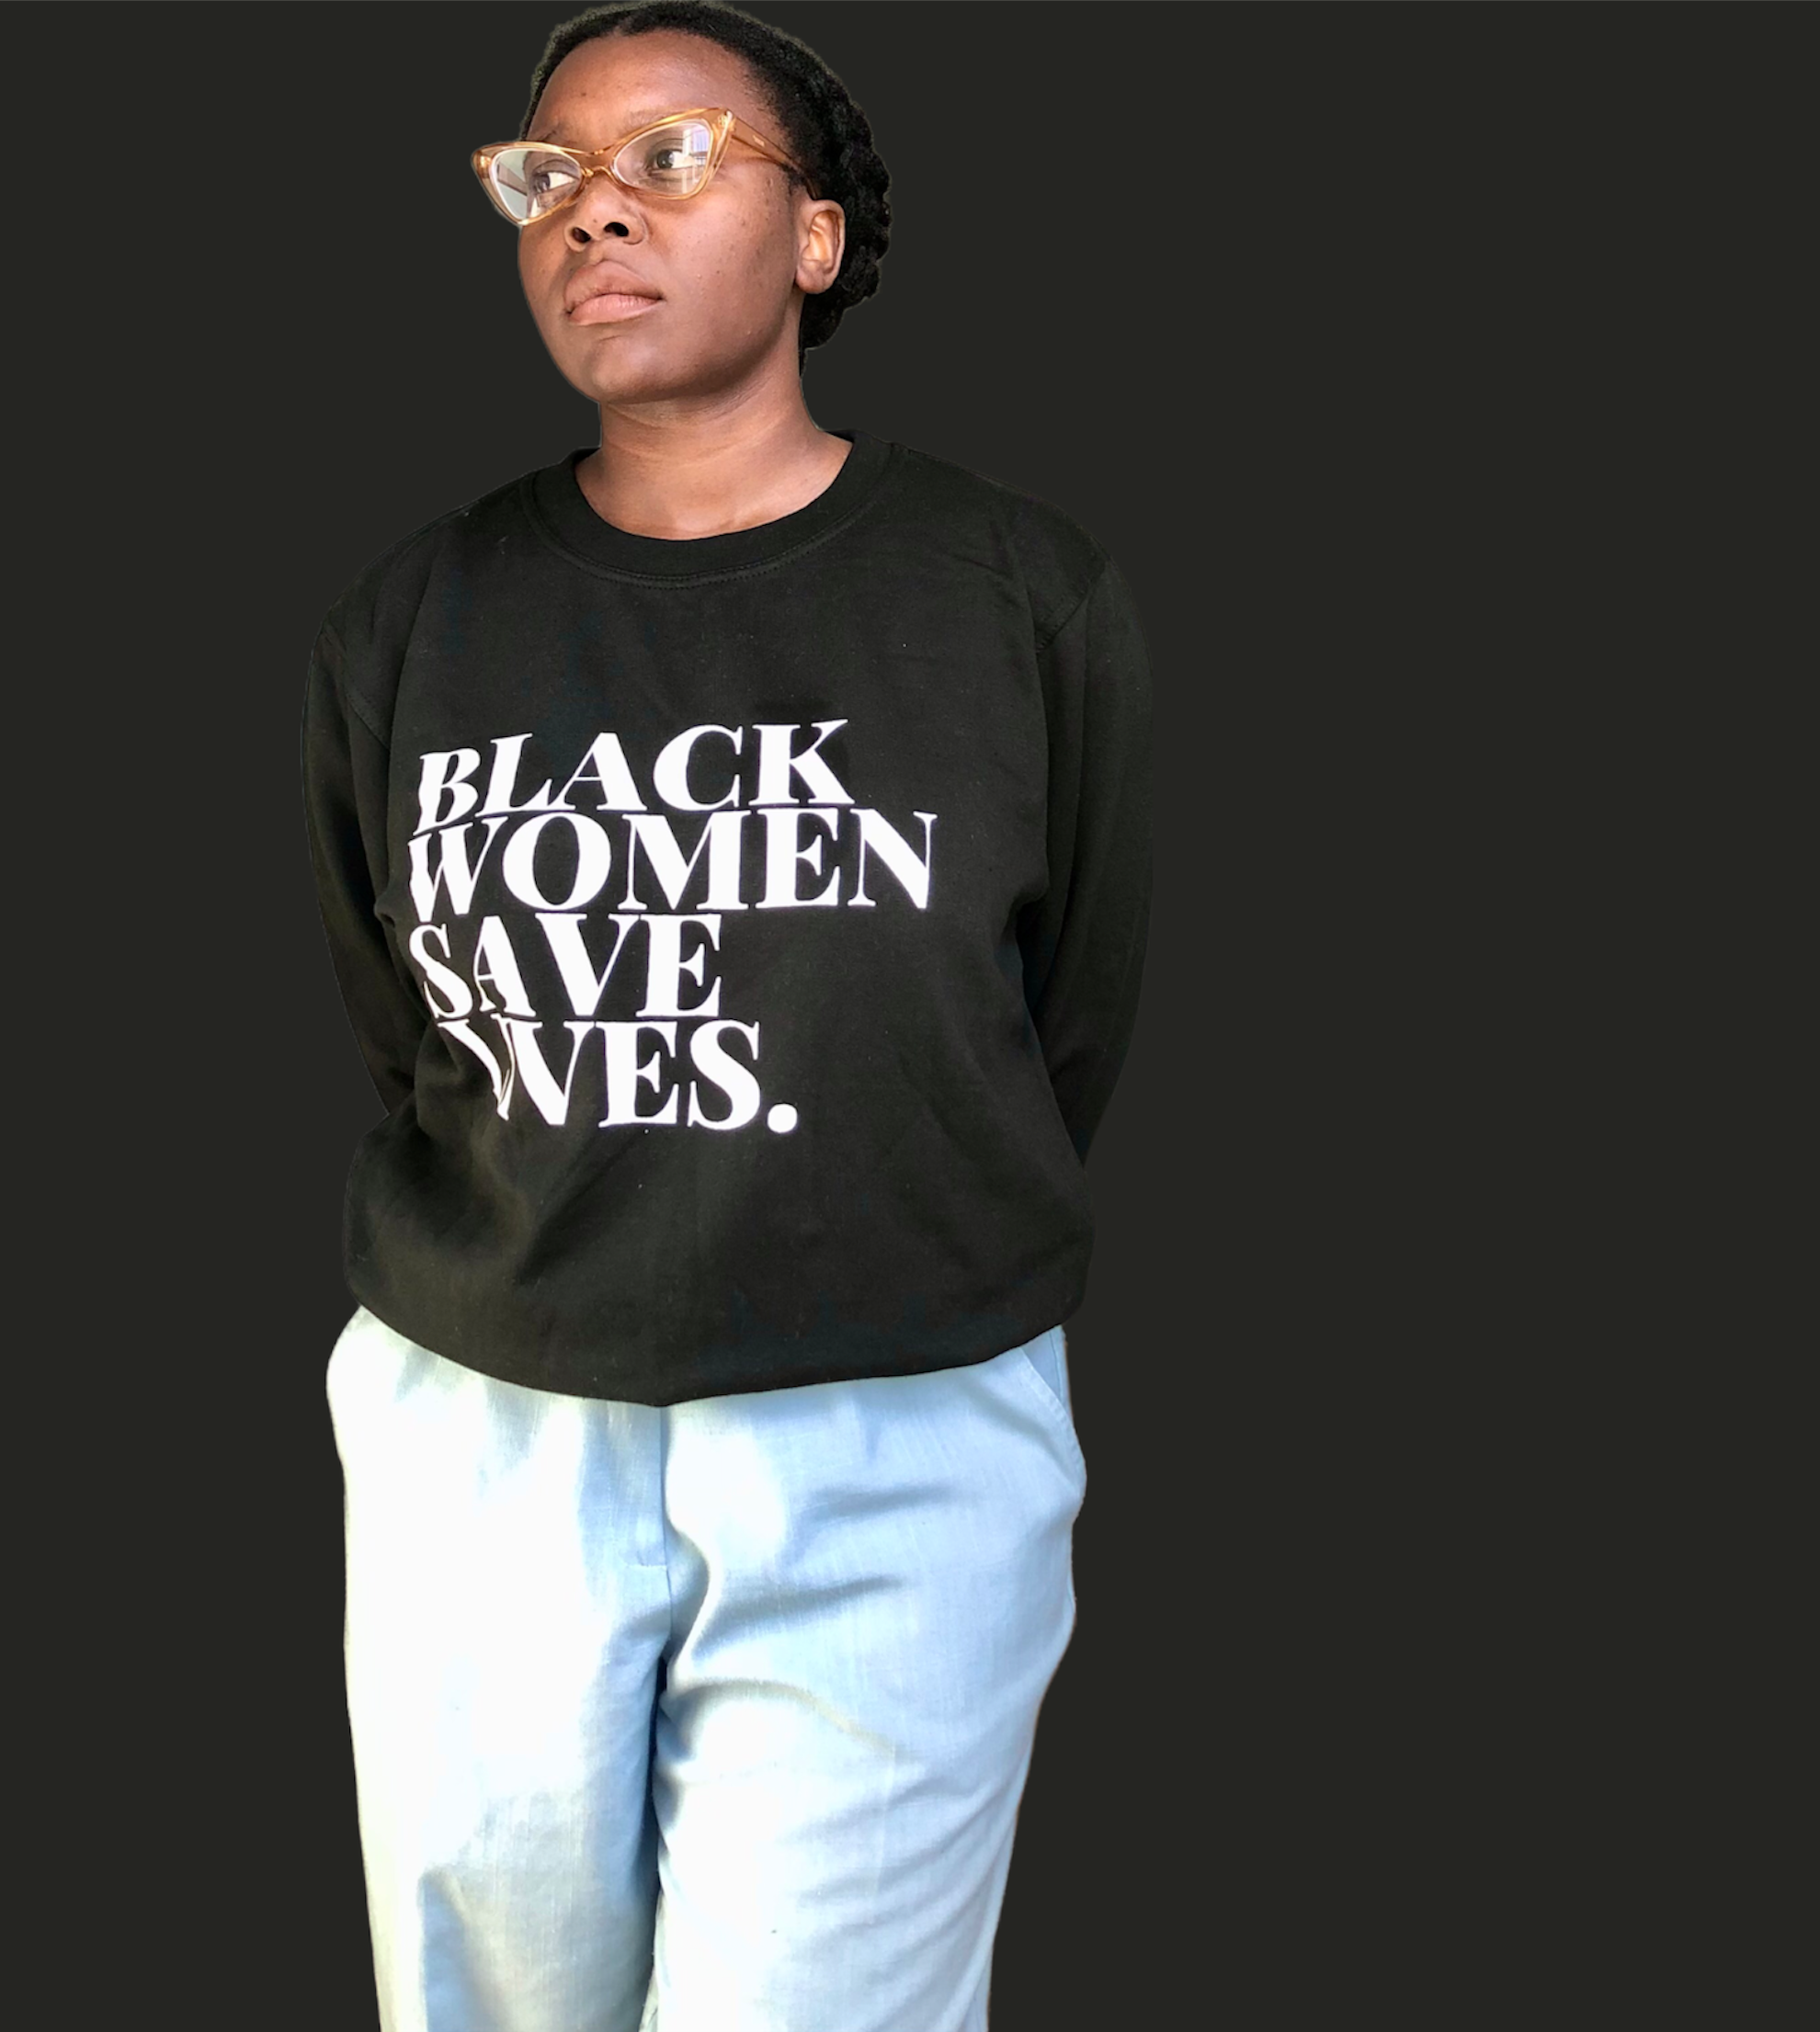 Black Women Save Lives. Sweater